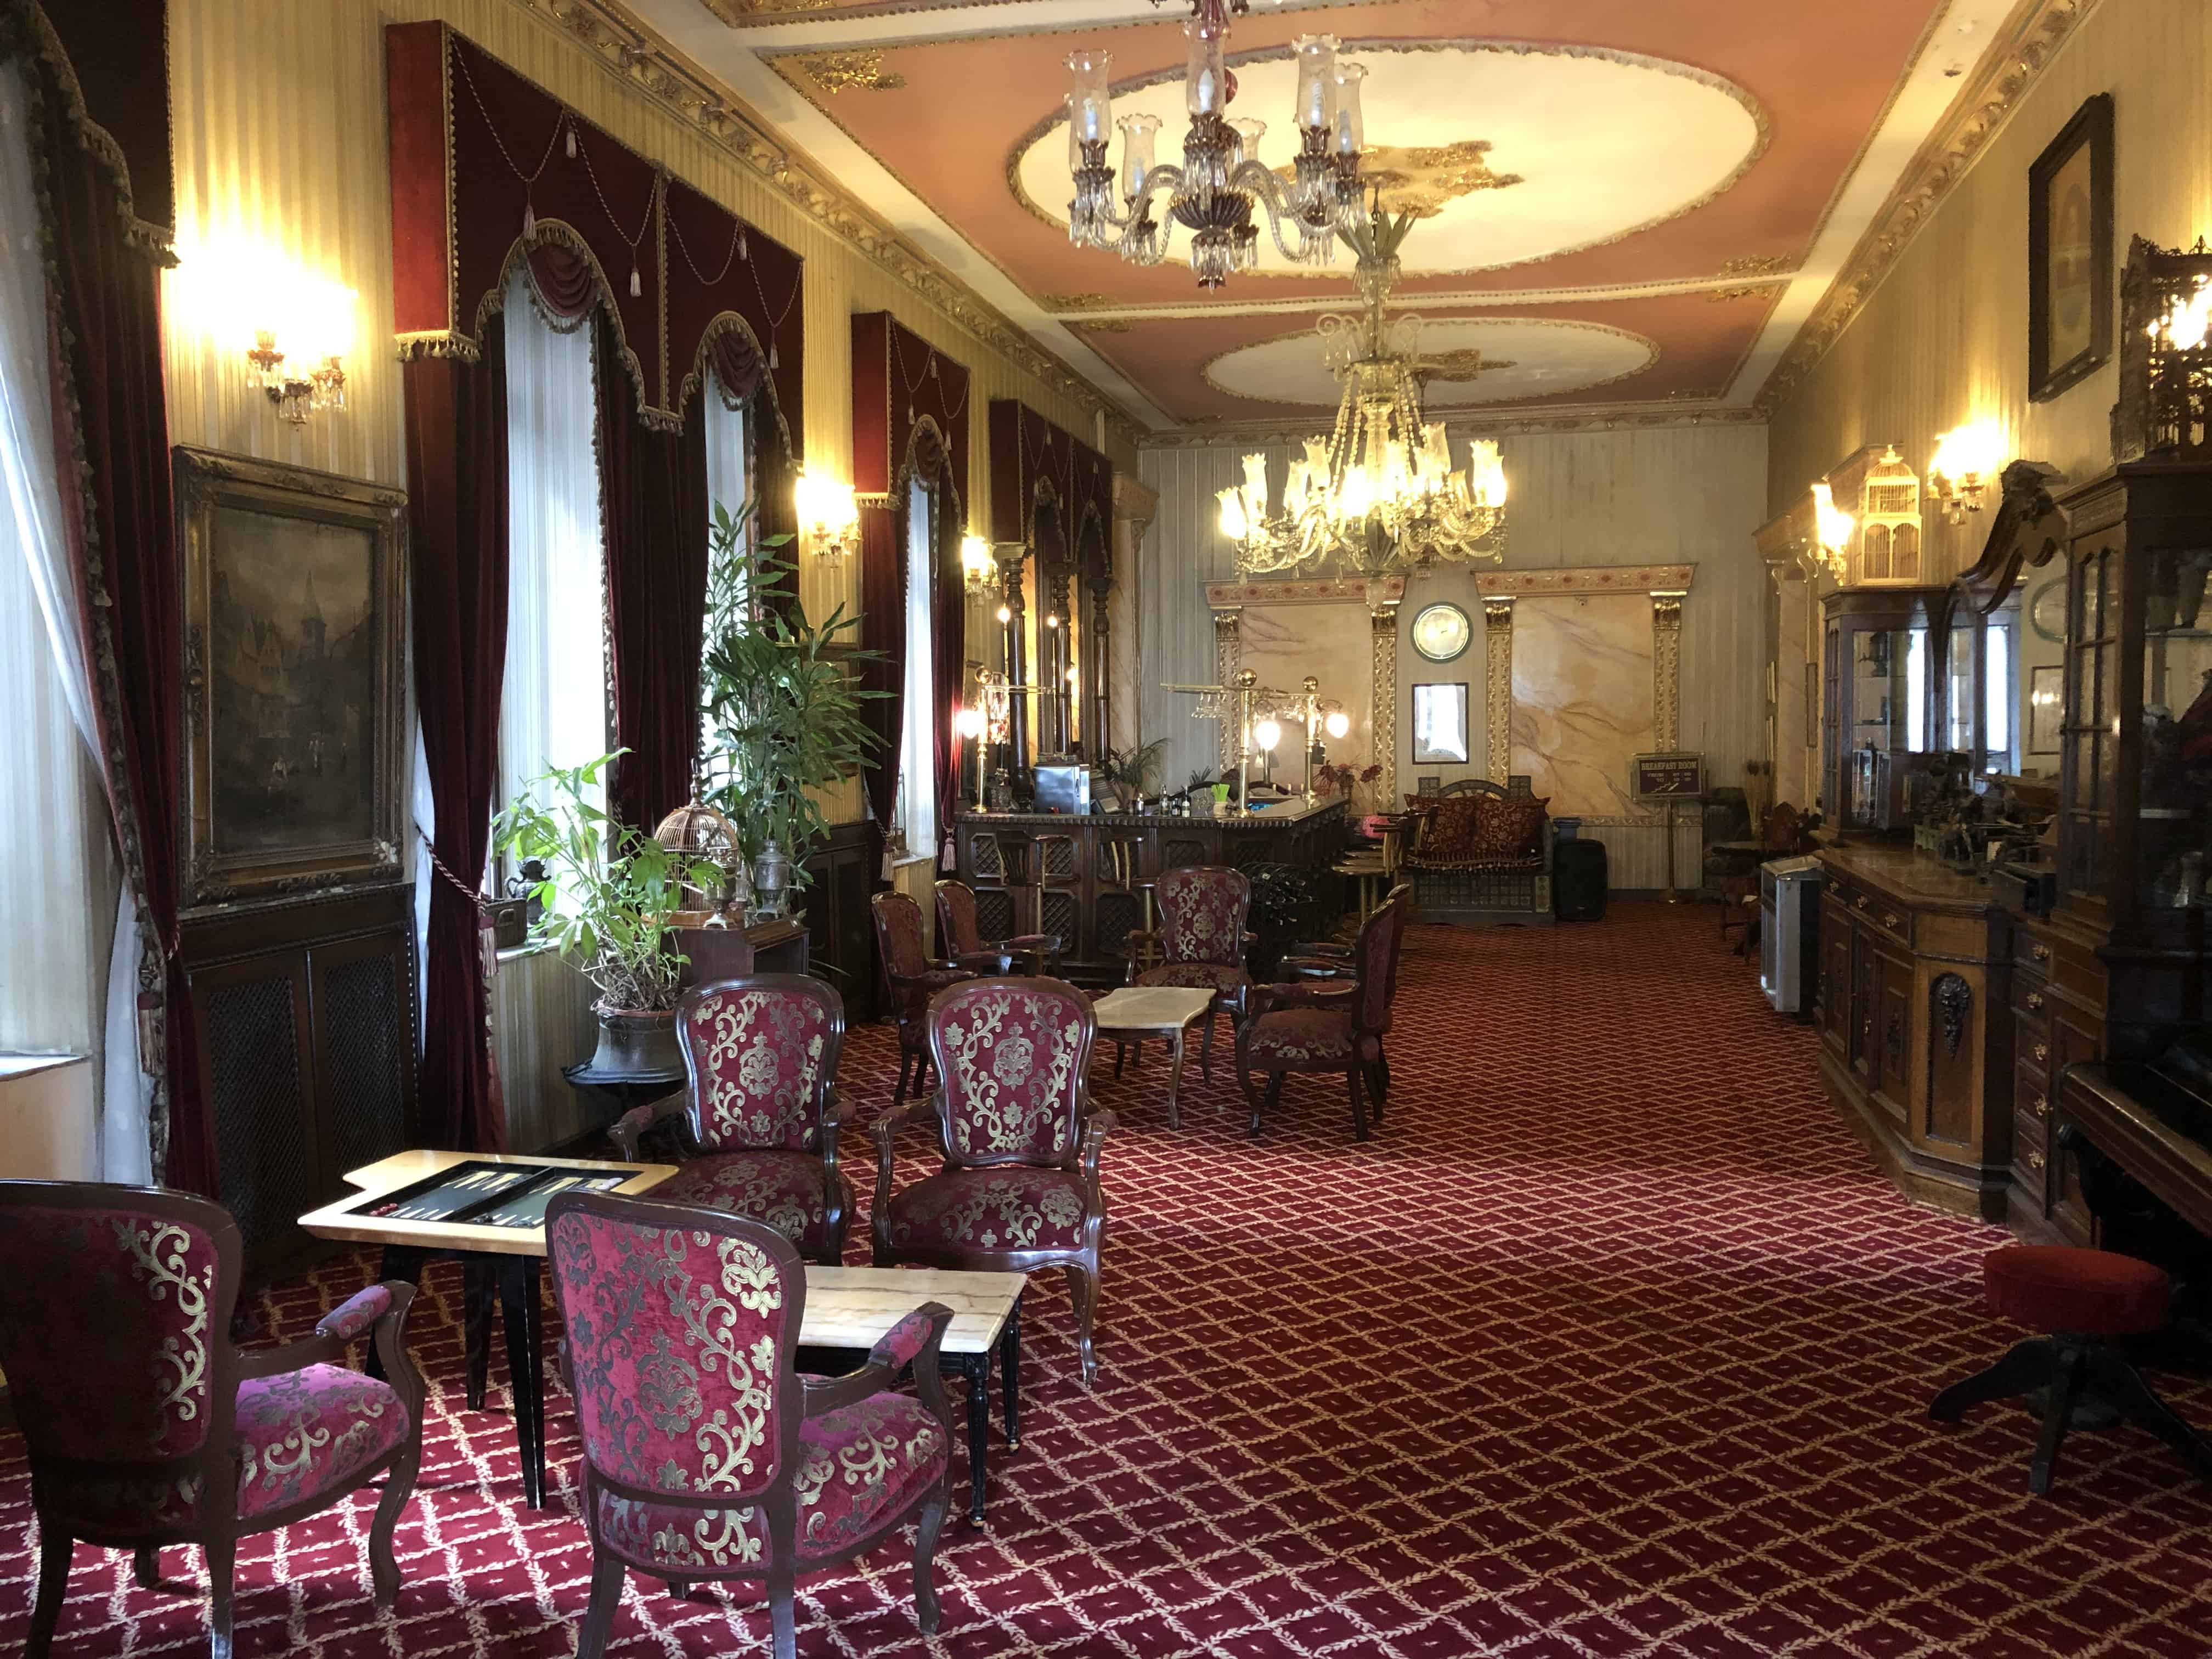 Salon of the Grand Hotel de Londres in Tepebaşı, Istanbul, Turkey